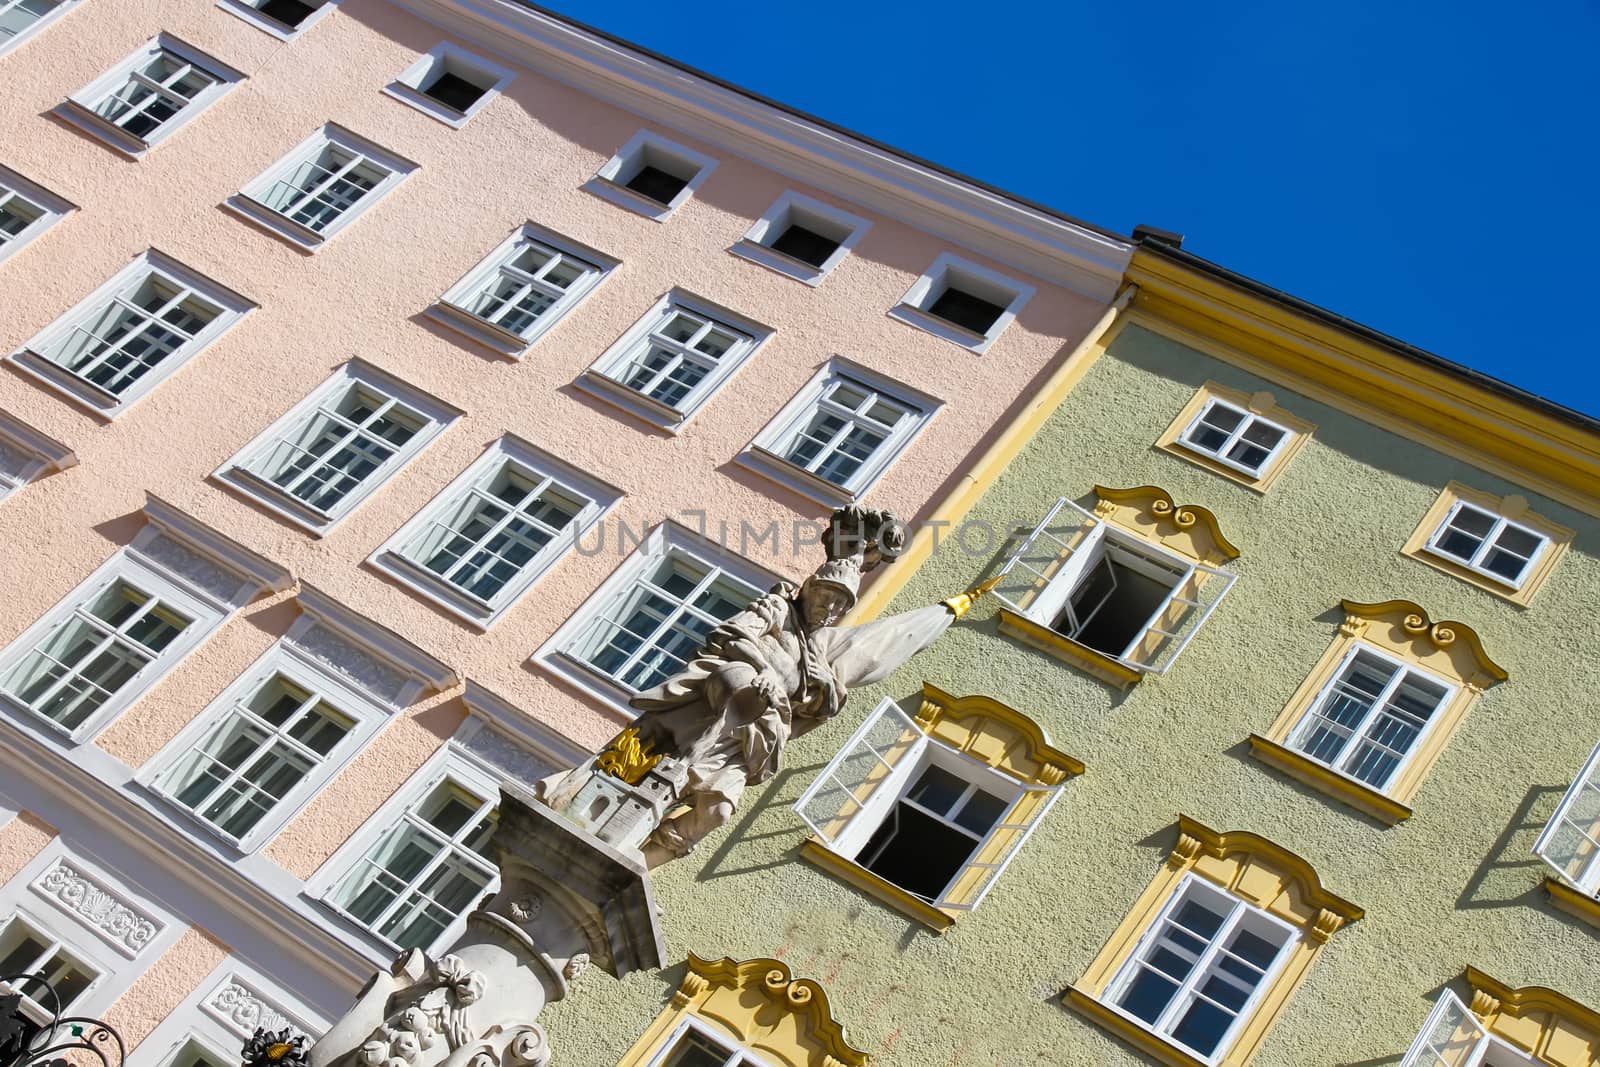 Historic Architecture in Salzburg, Austria, Europe.